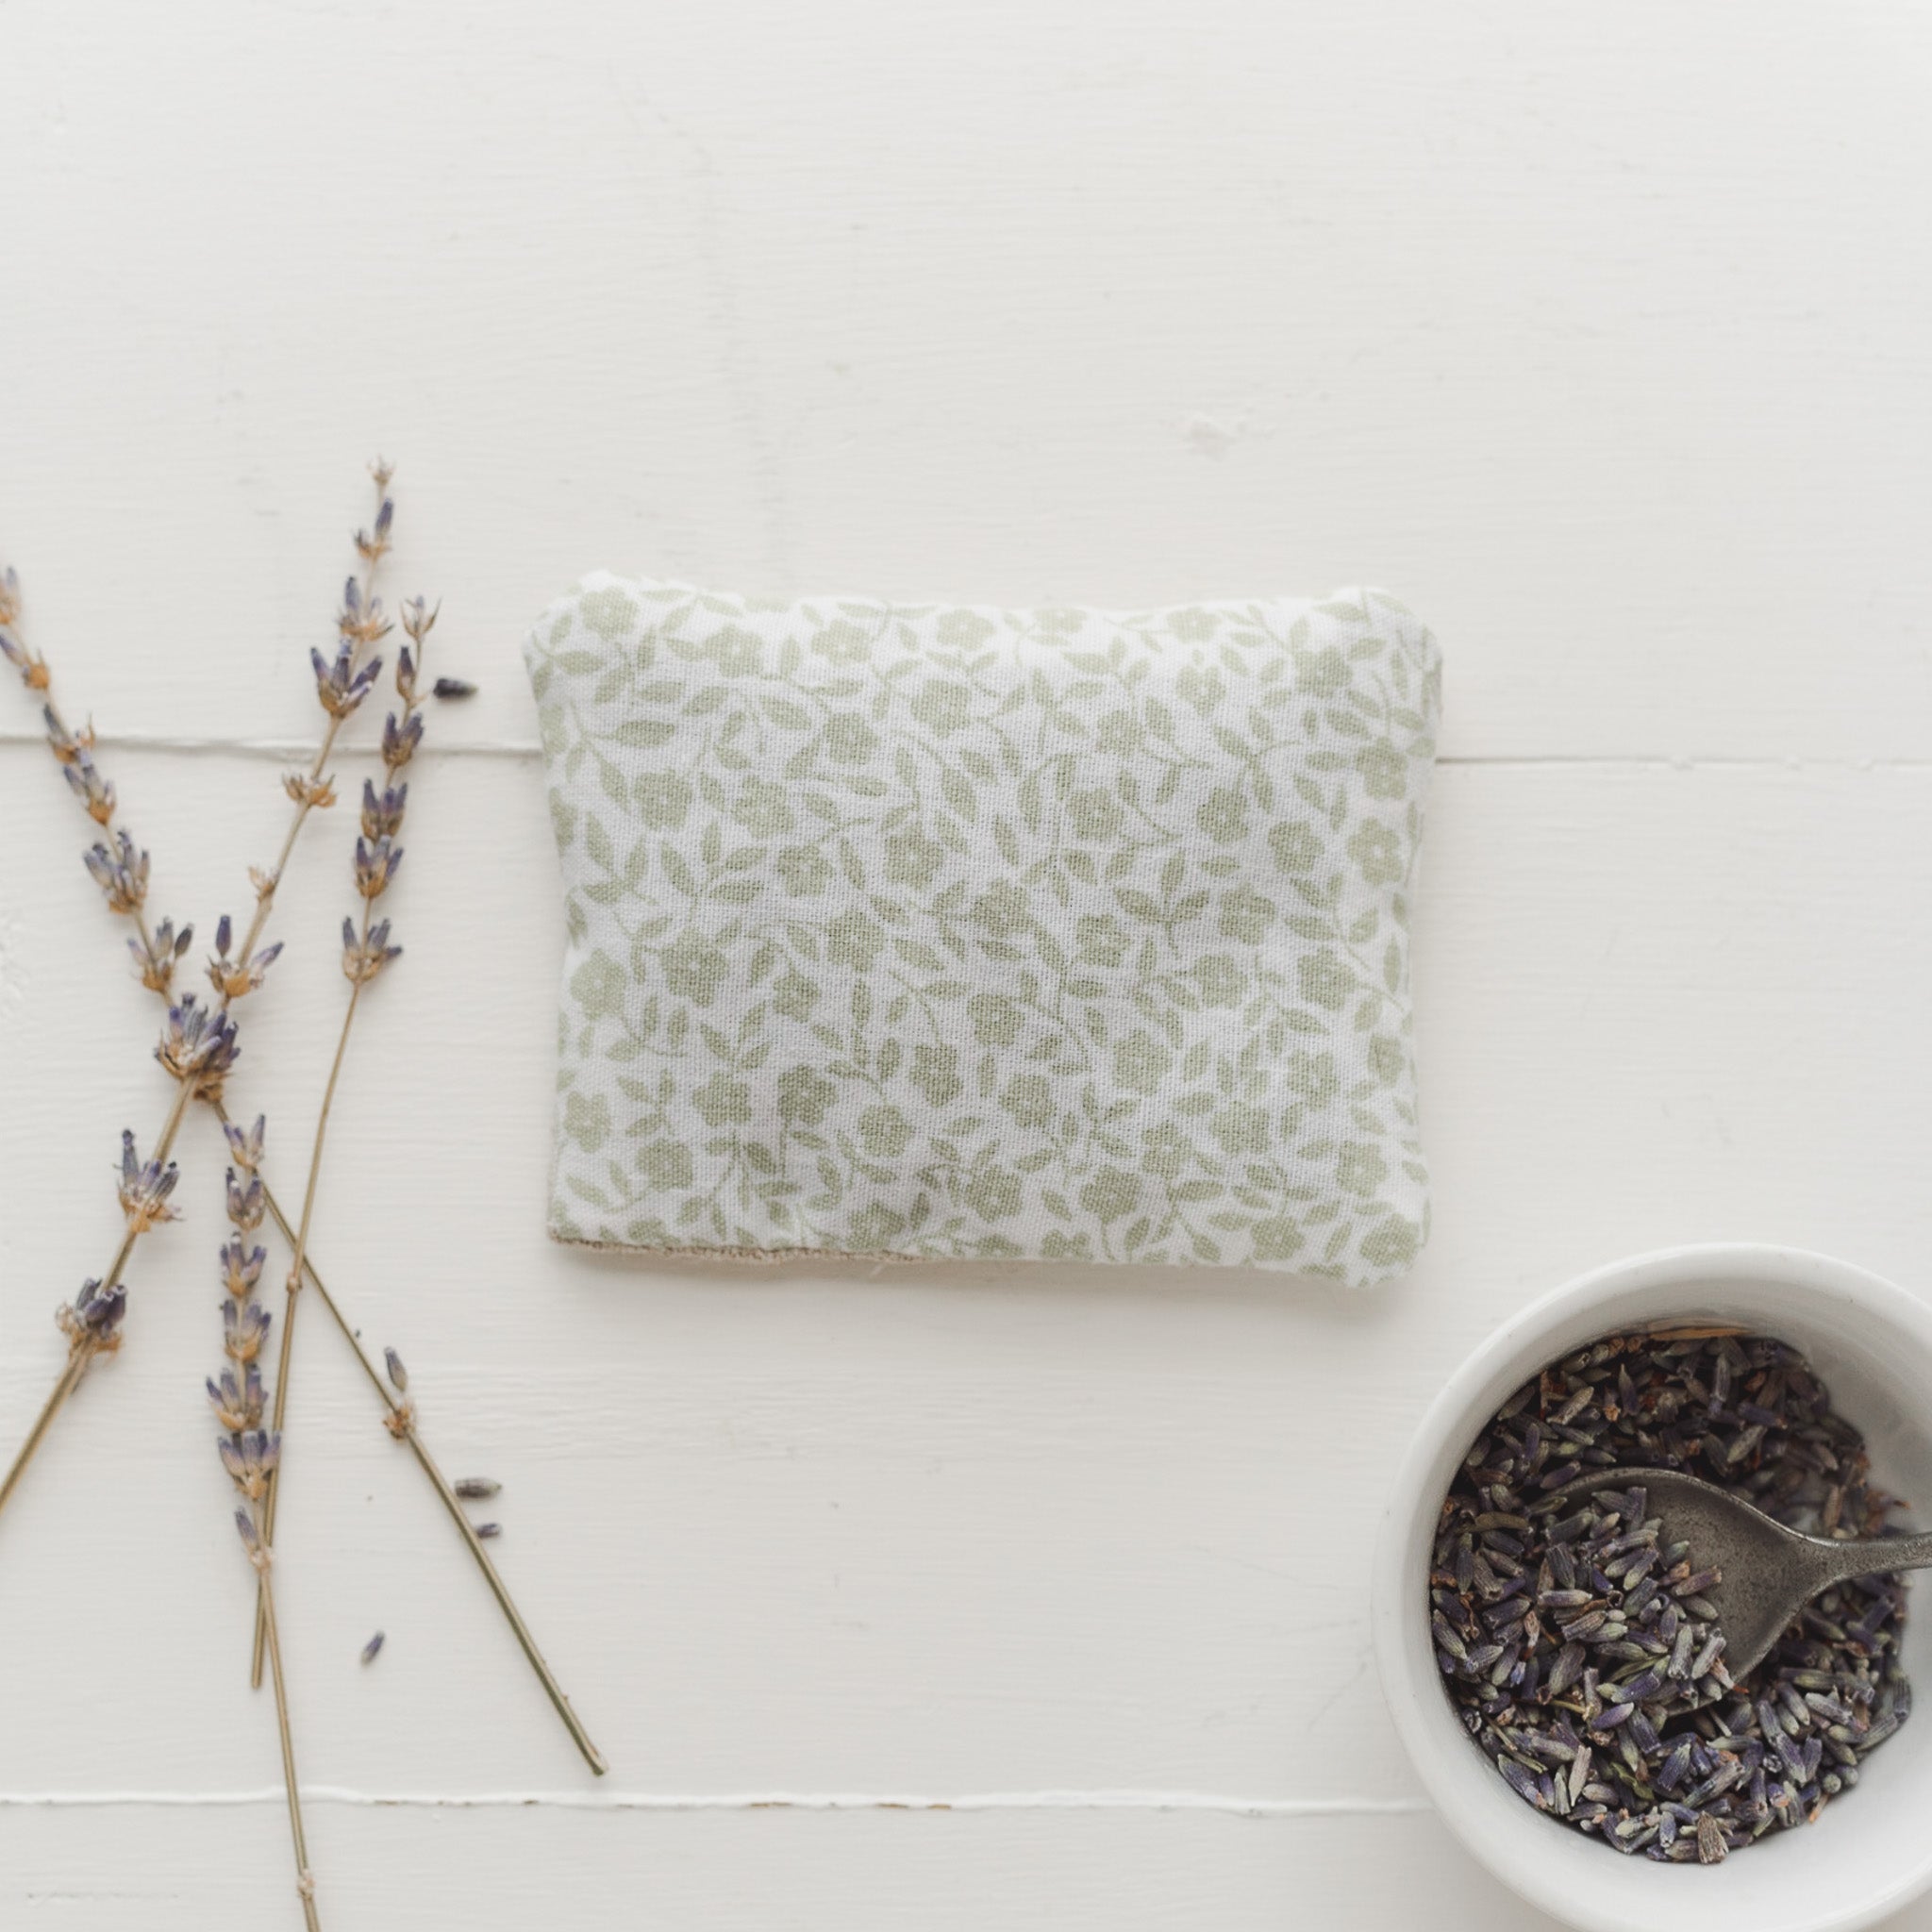 Handmade Lavender Sachet - Set of 3 Green Floral